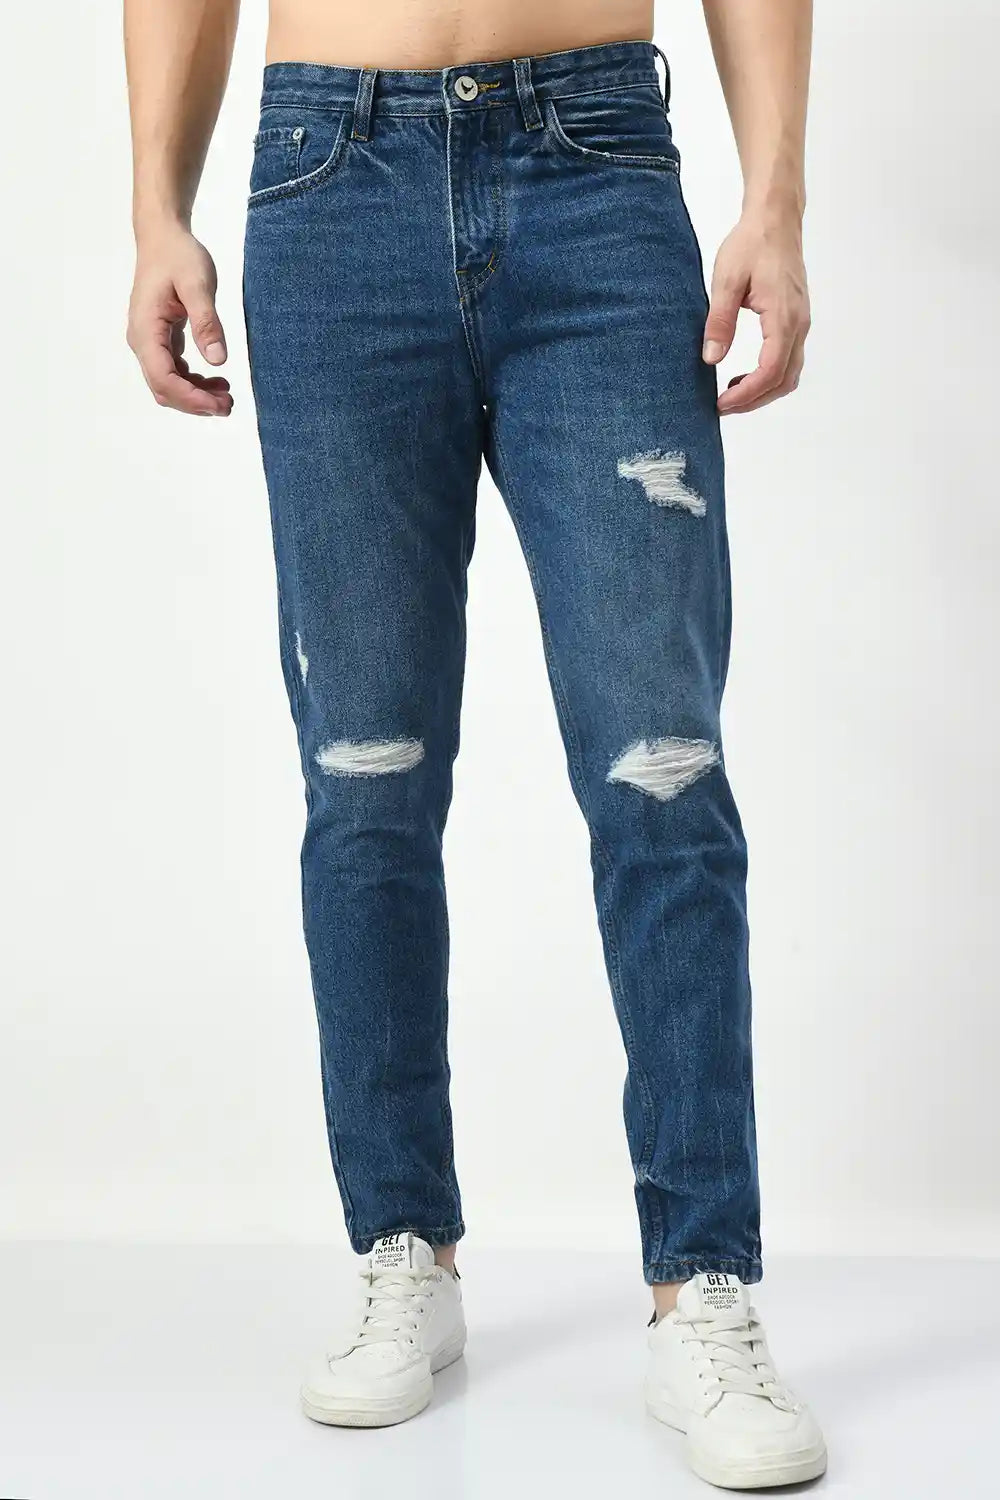 Buy Damage Jeans | Tone Jeans online India | Jimmy Luxury